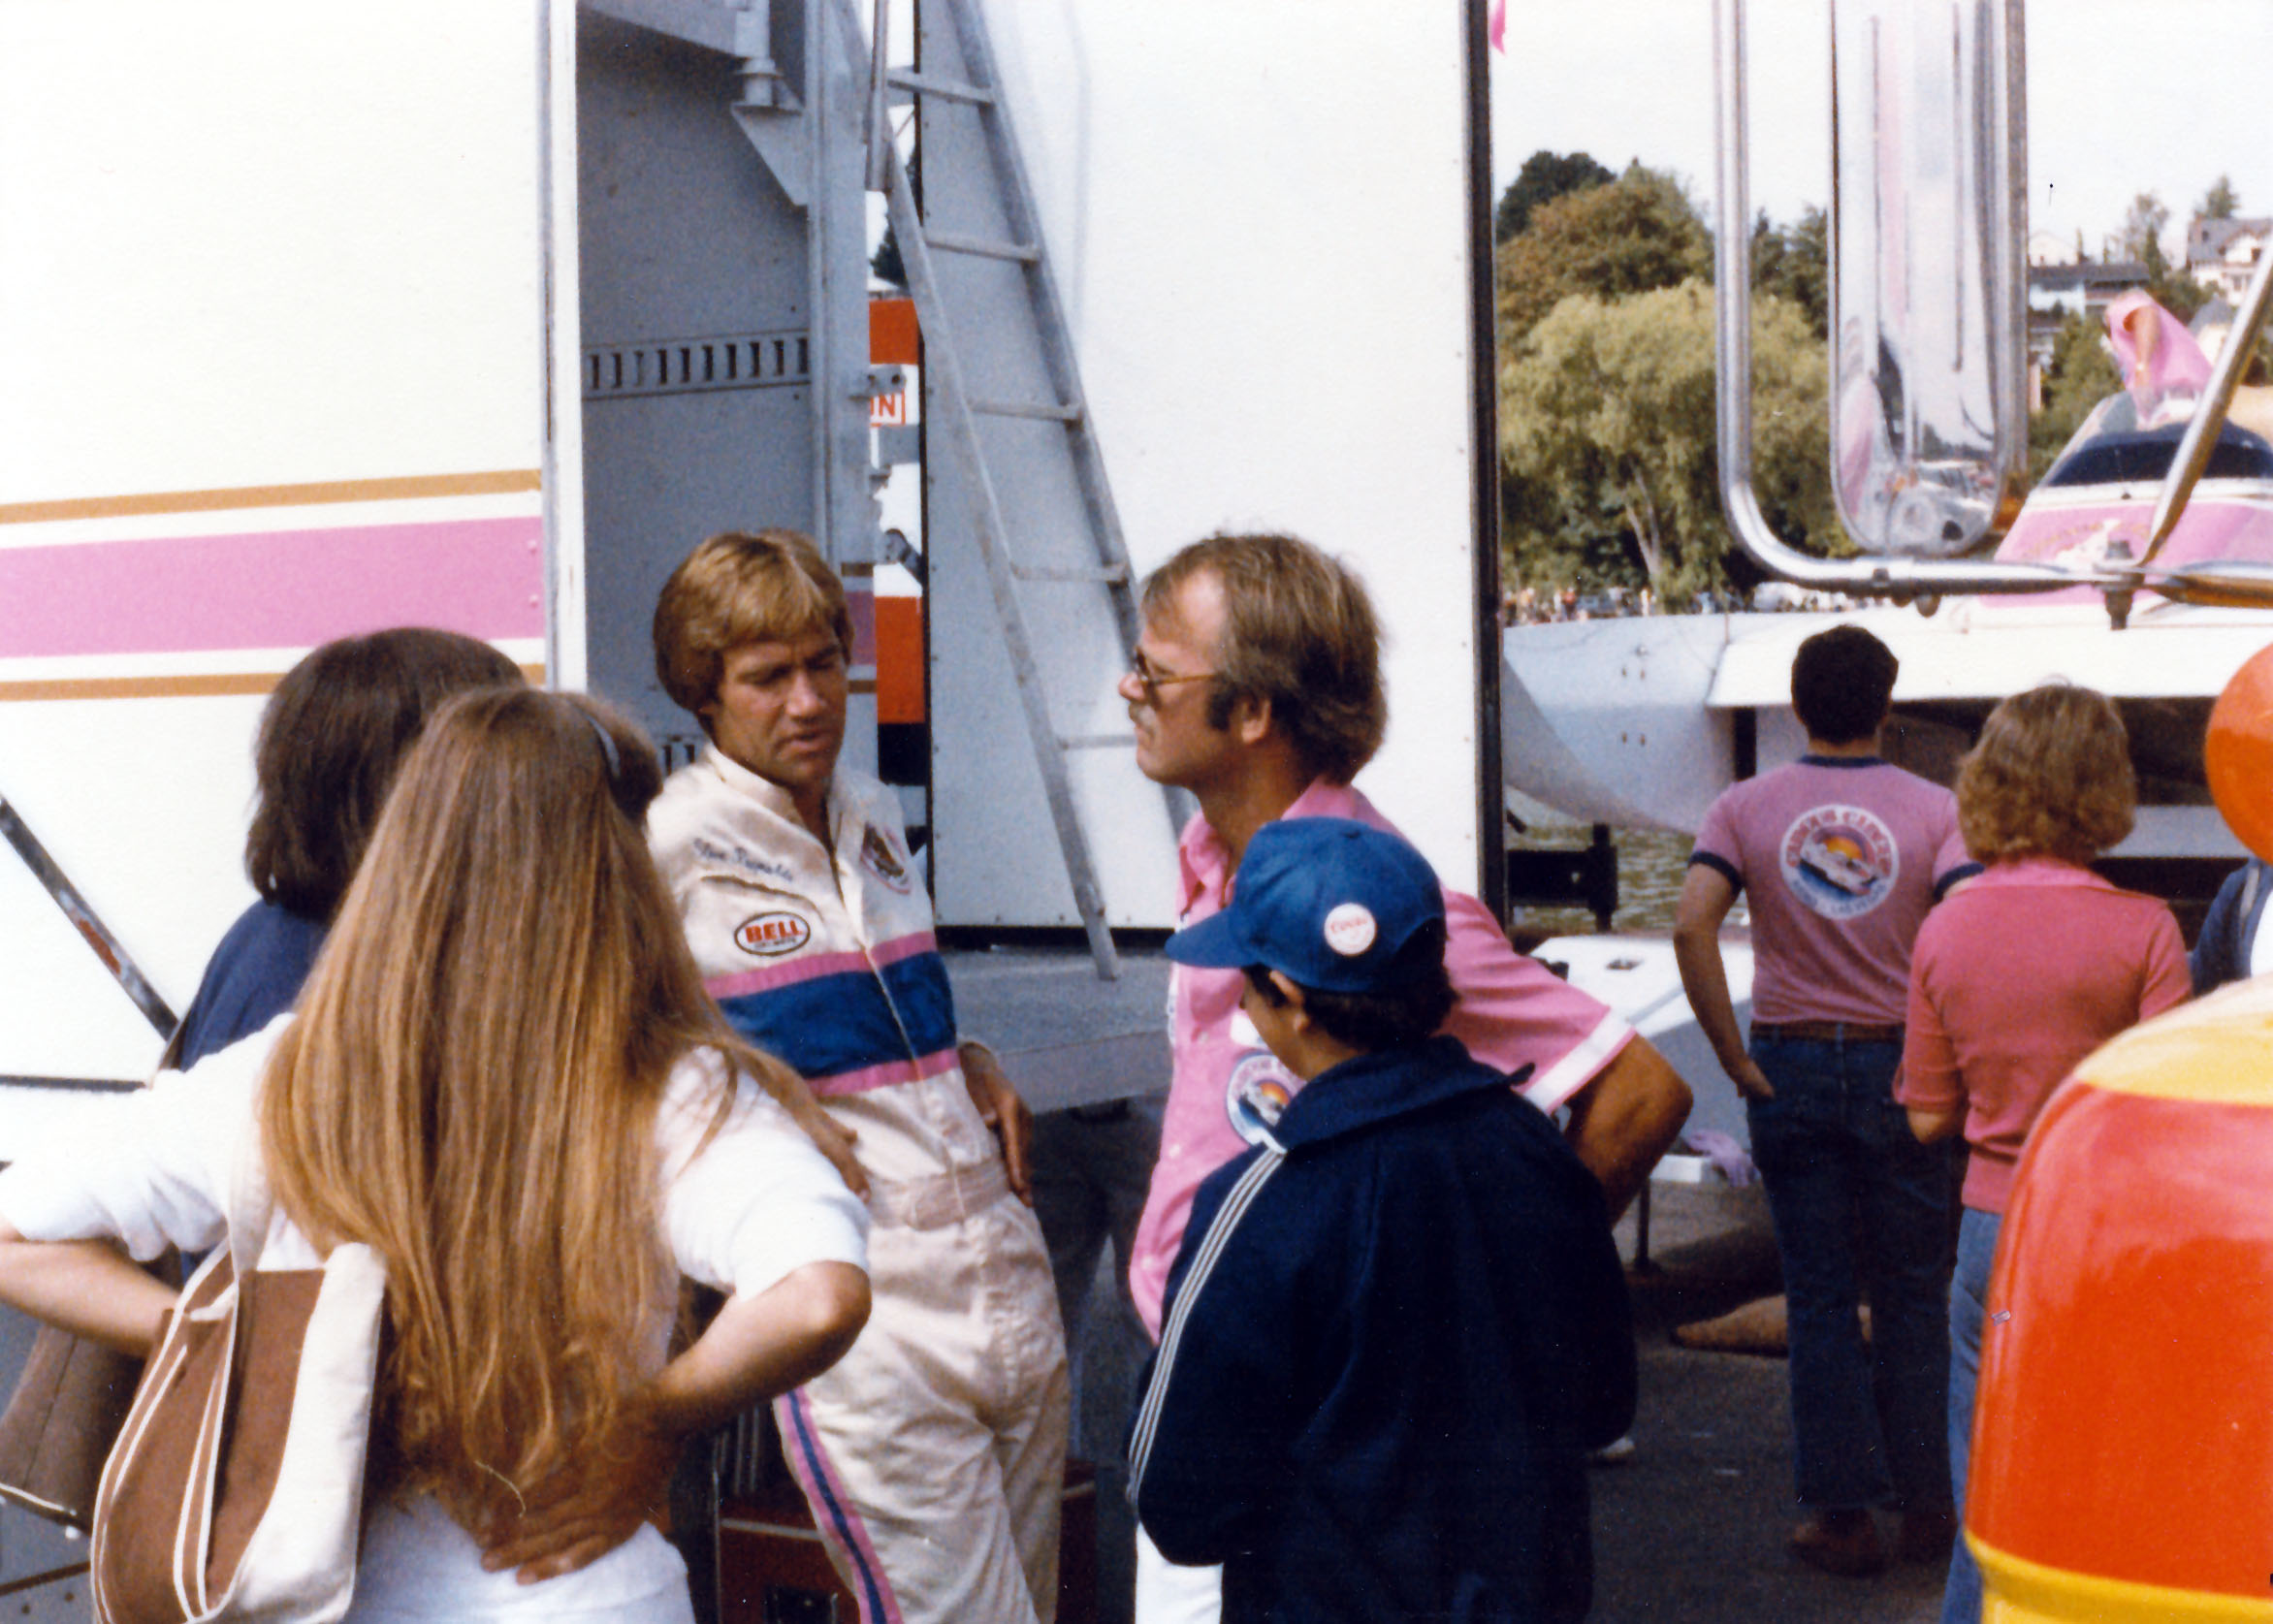 Steve Reynolds and Jim Harvey, 1979